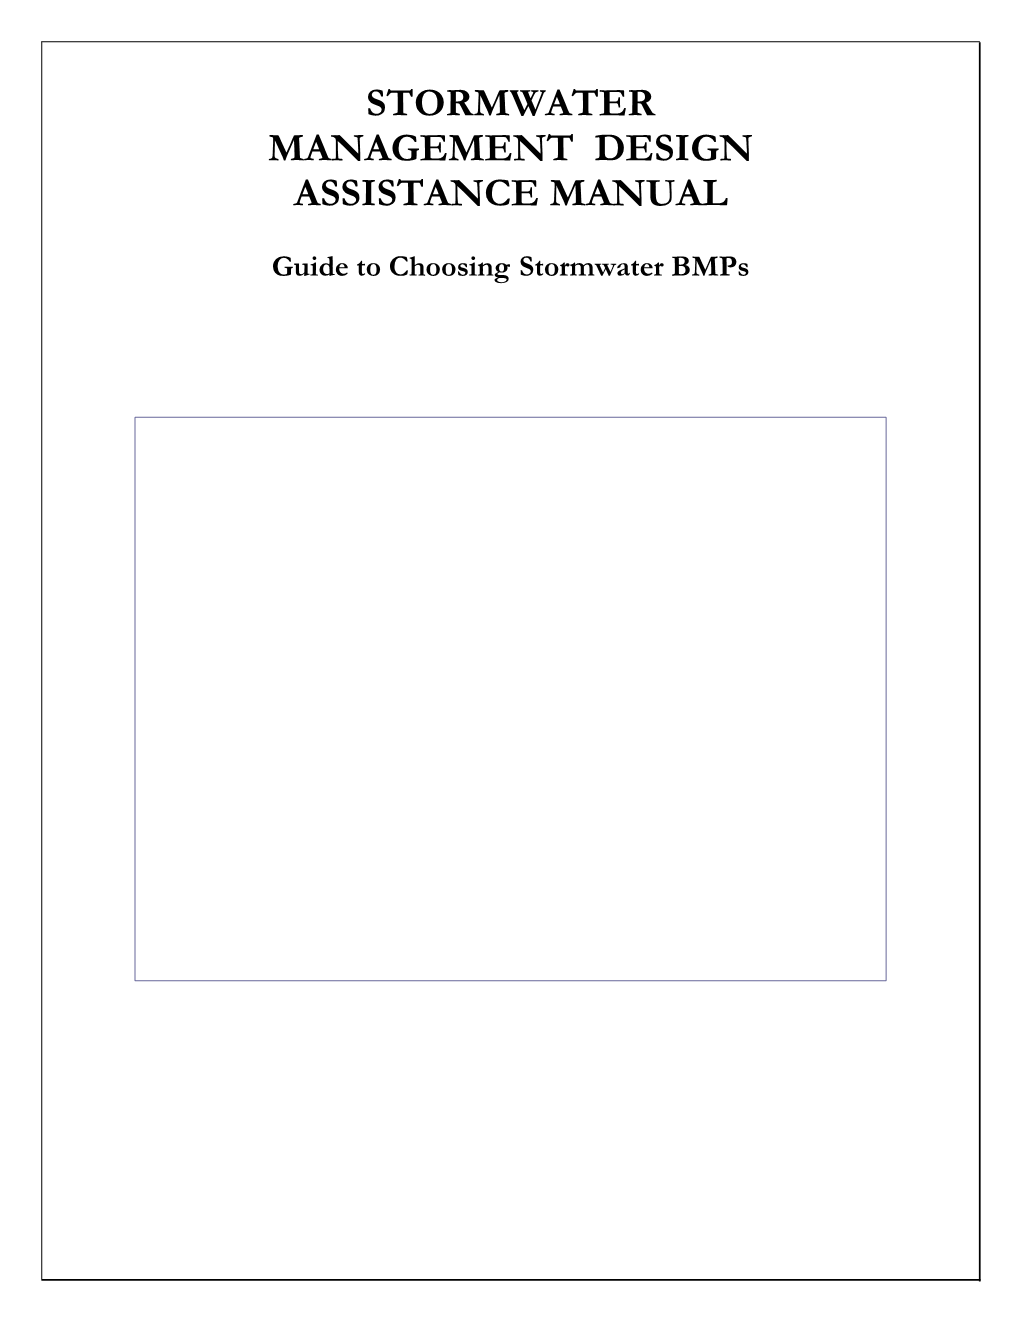 Stormwater Management Design Assistance Manual